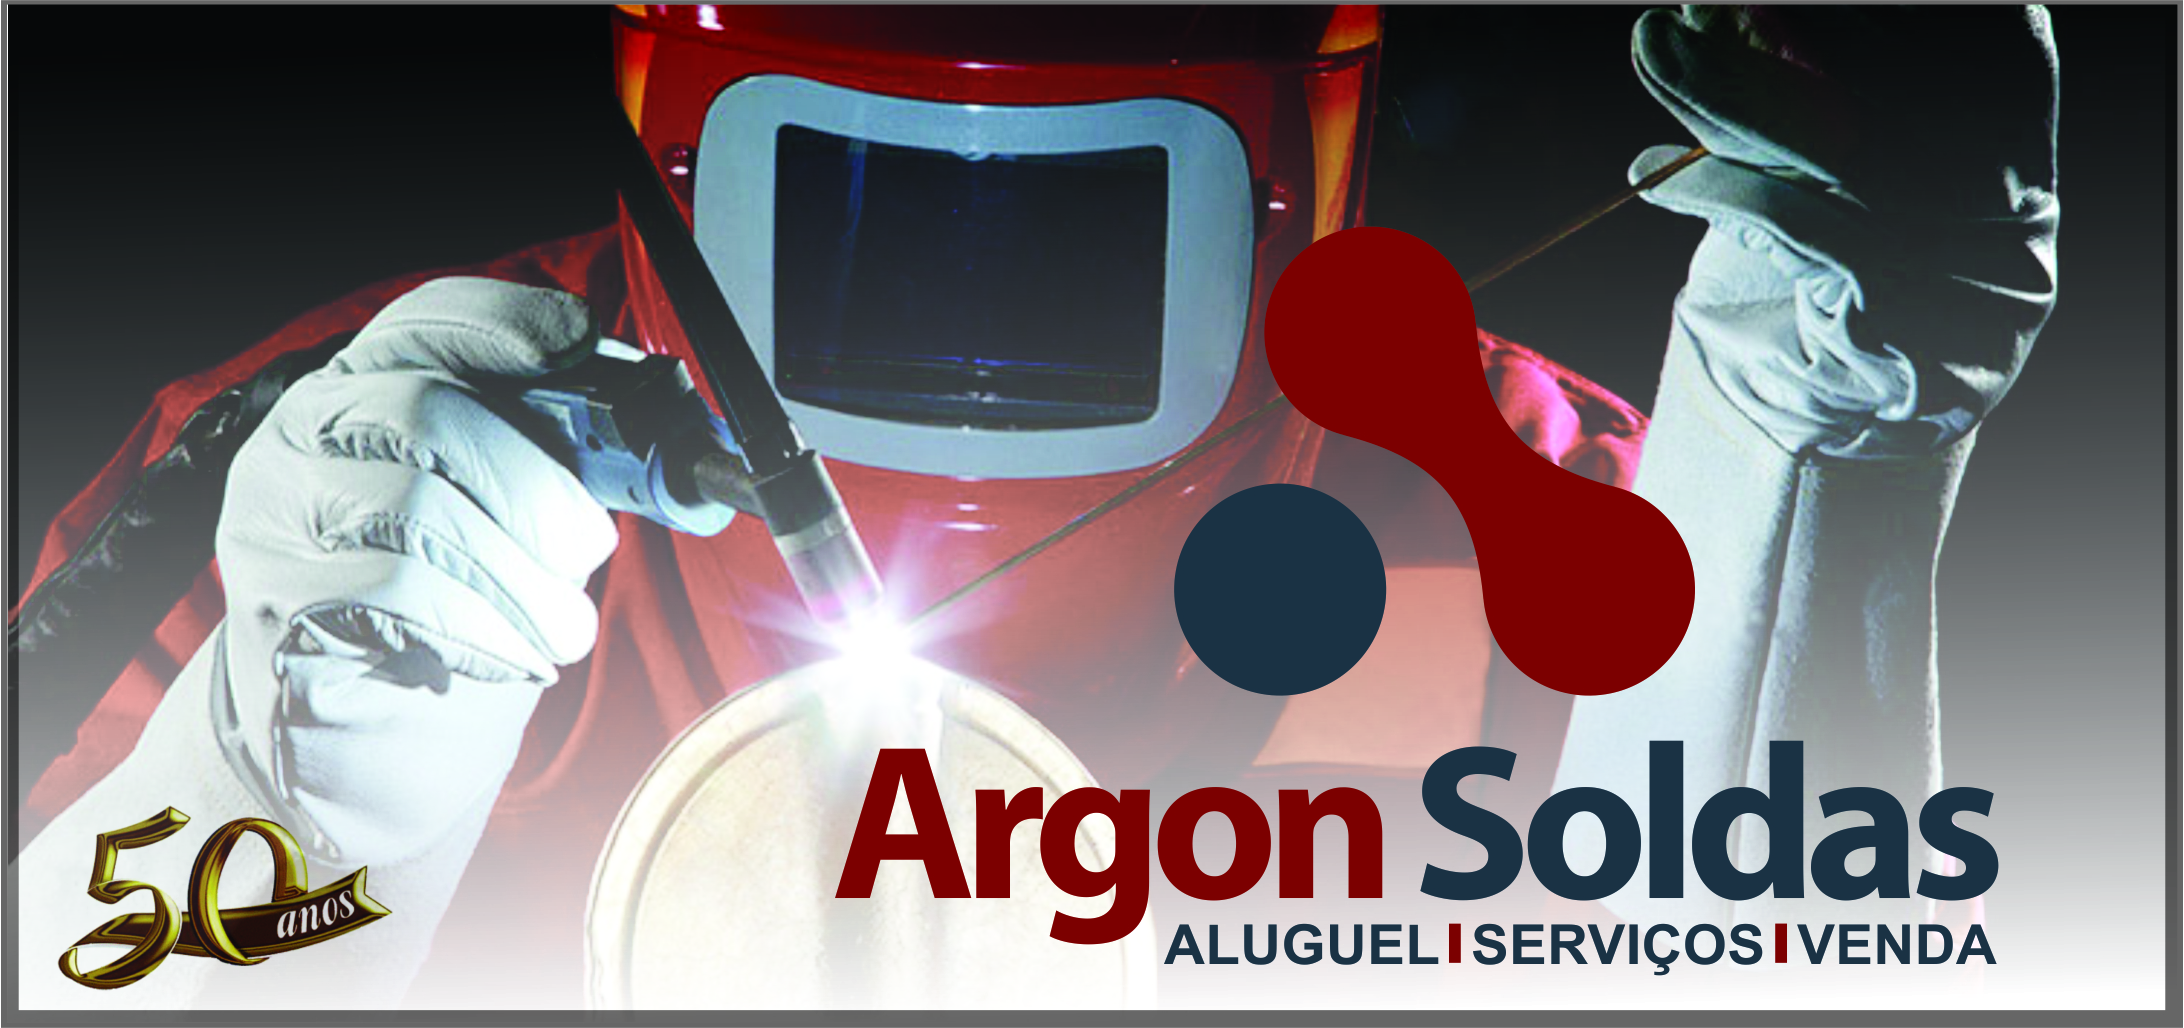 Argon 50 anos